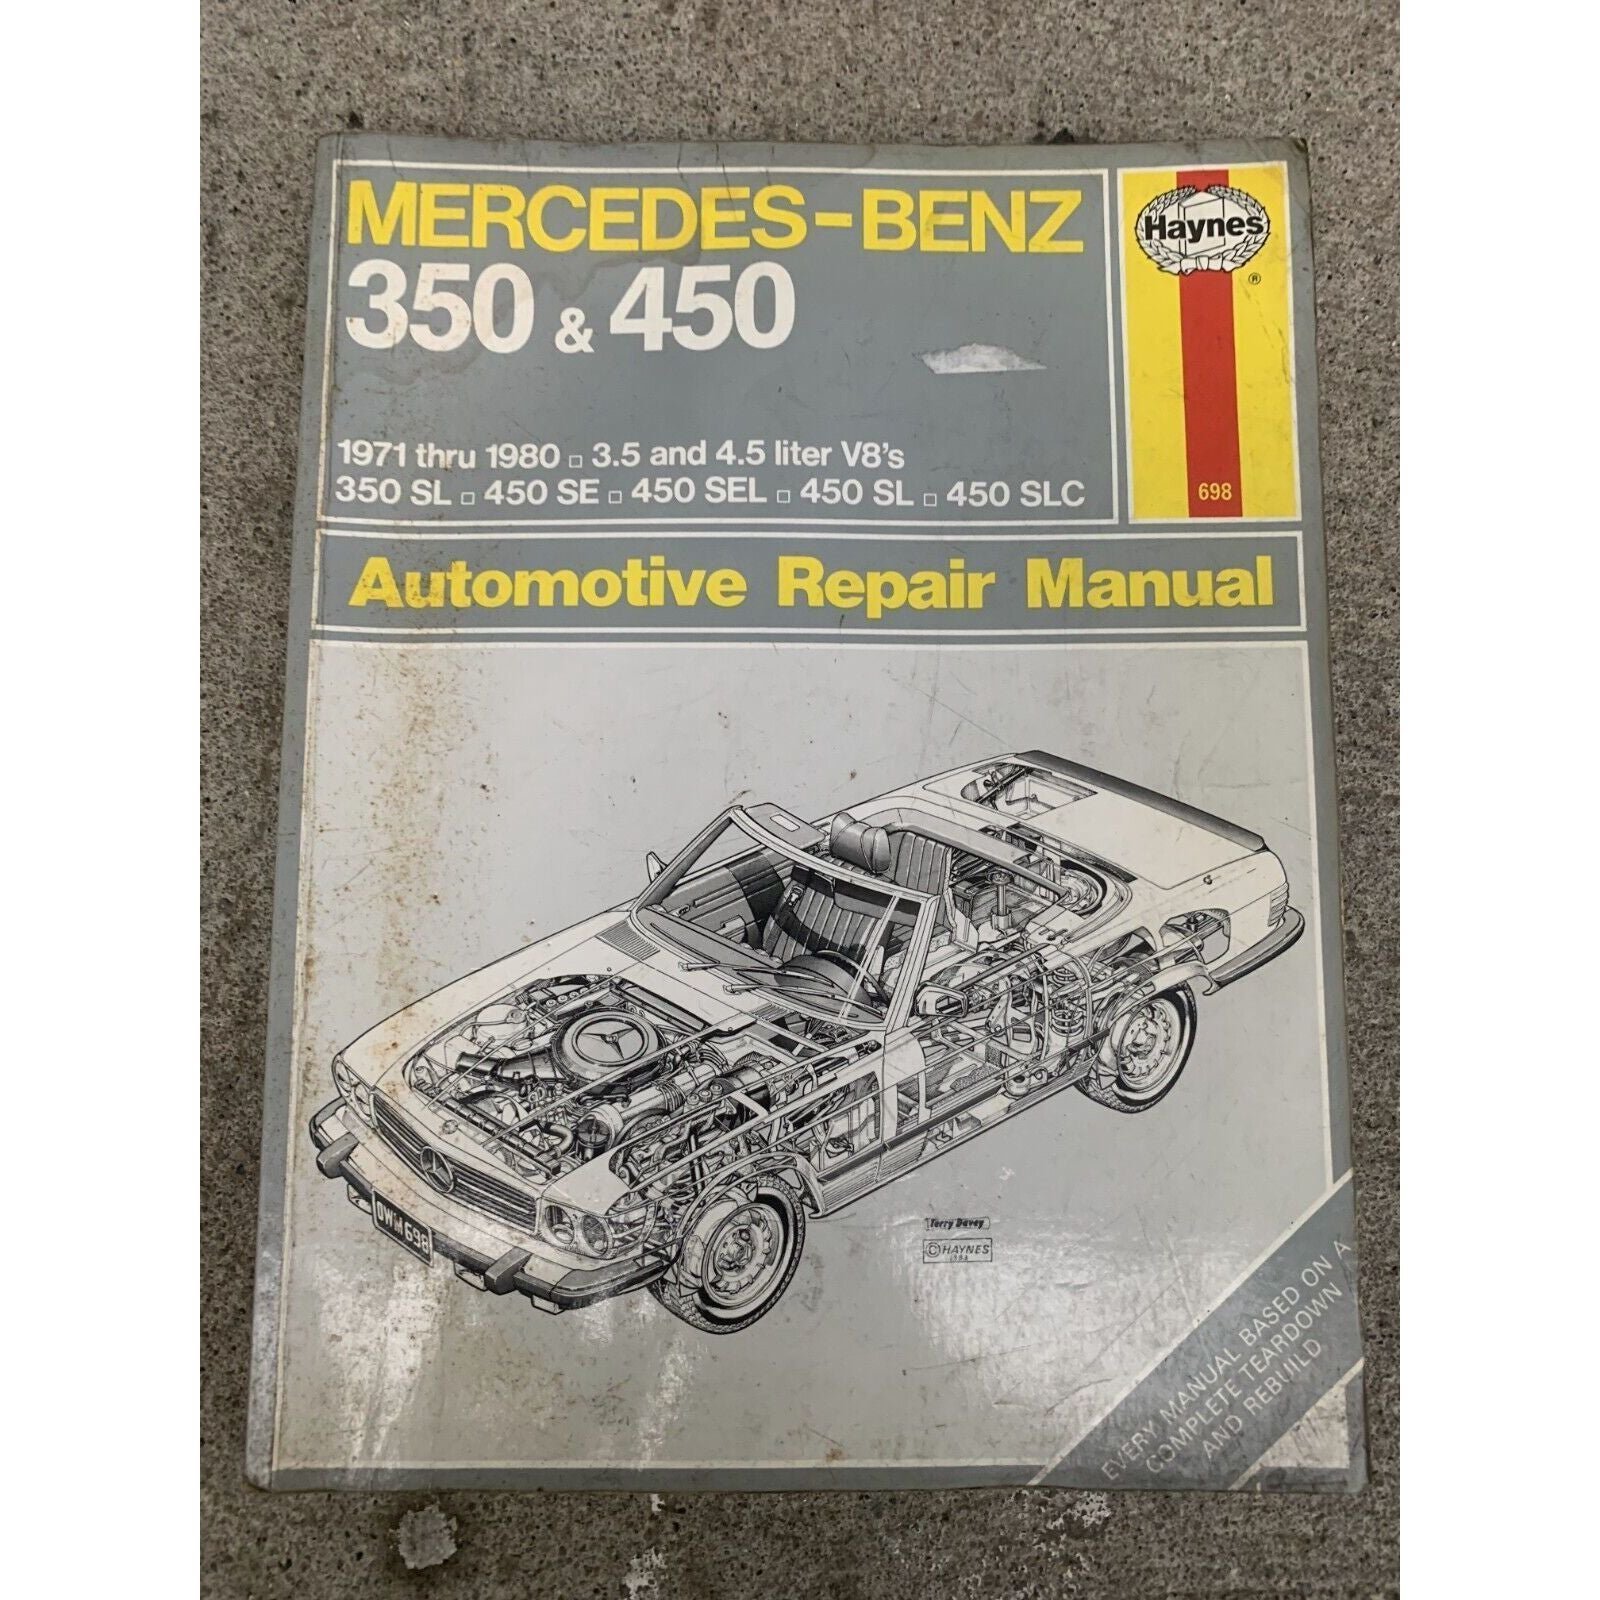 Haynes 698 Mercedes-Benz 350 & 450 (1971 Thru 1980) Automotive Repair Manual o0WBgKRtM